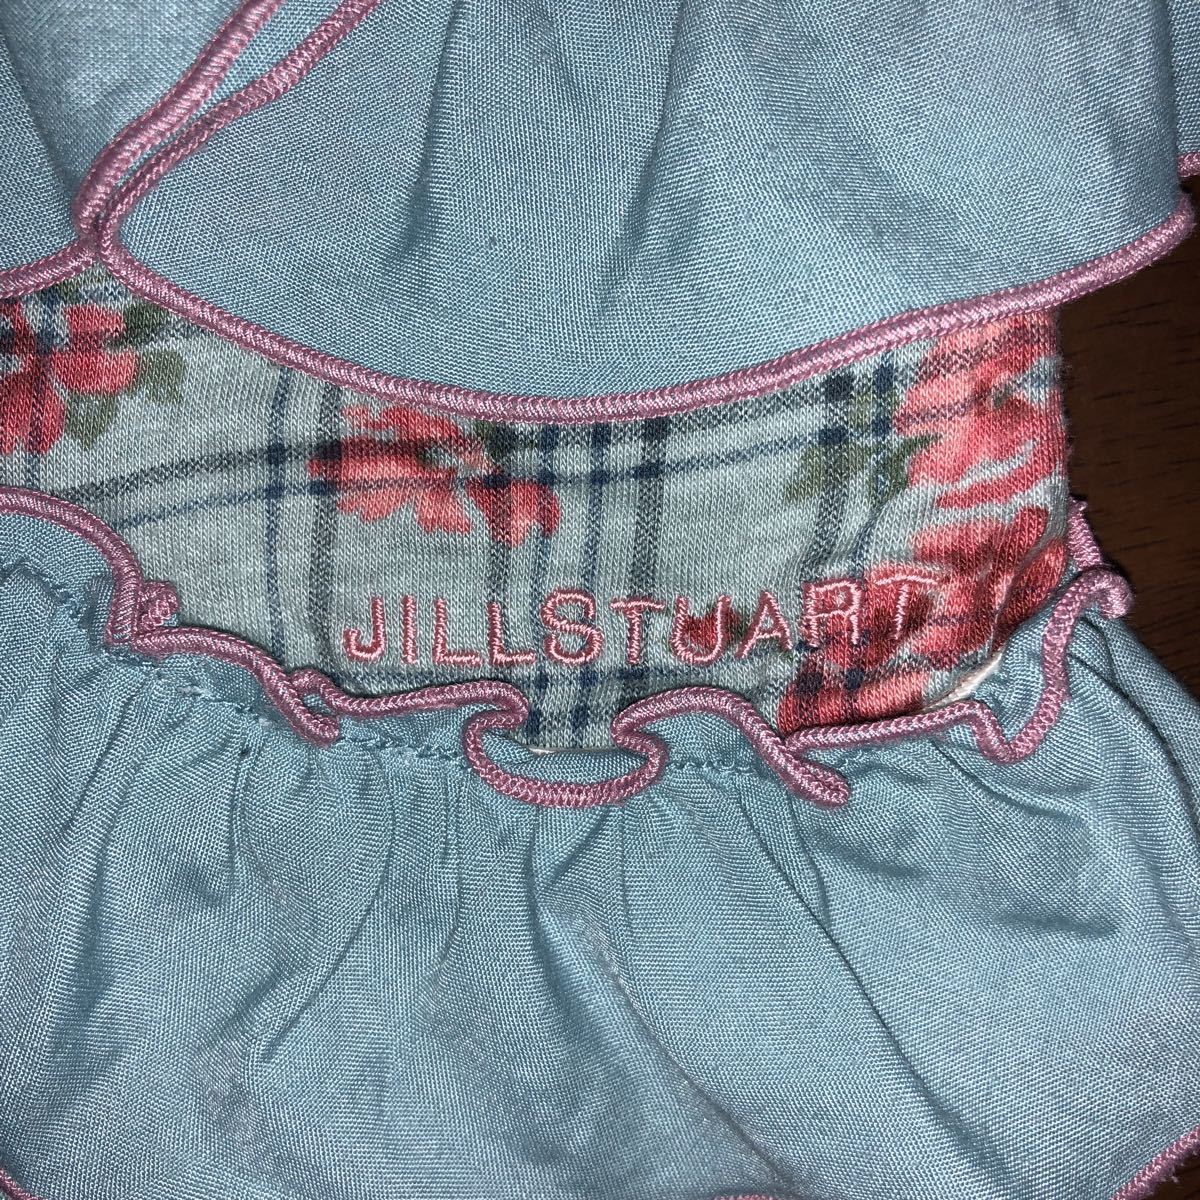 [JILL STUART NEW YORK| Jill Stuart ] мини-юбка юбка-клеш бледно-голубой × цветочный принт 90. б/у 